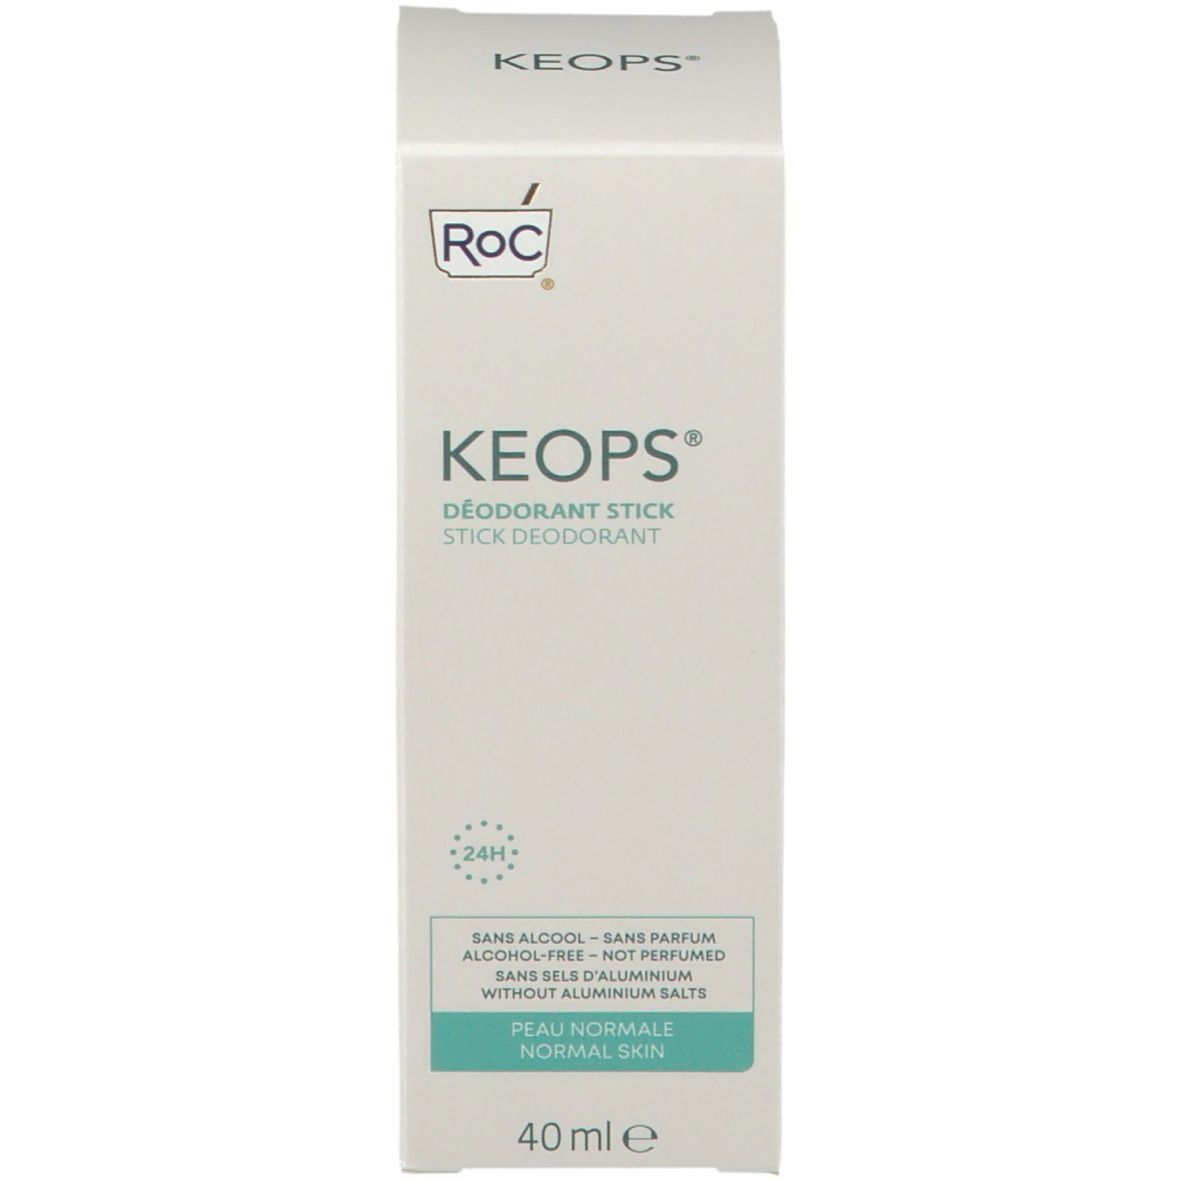 RoC® Keops® Deodorant Stick